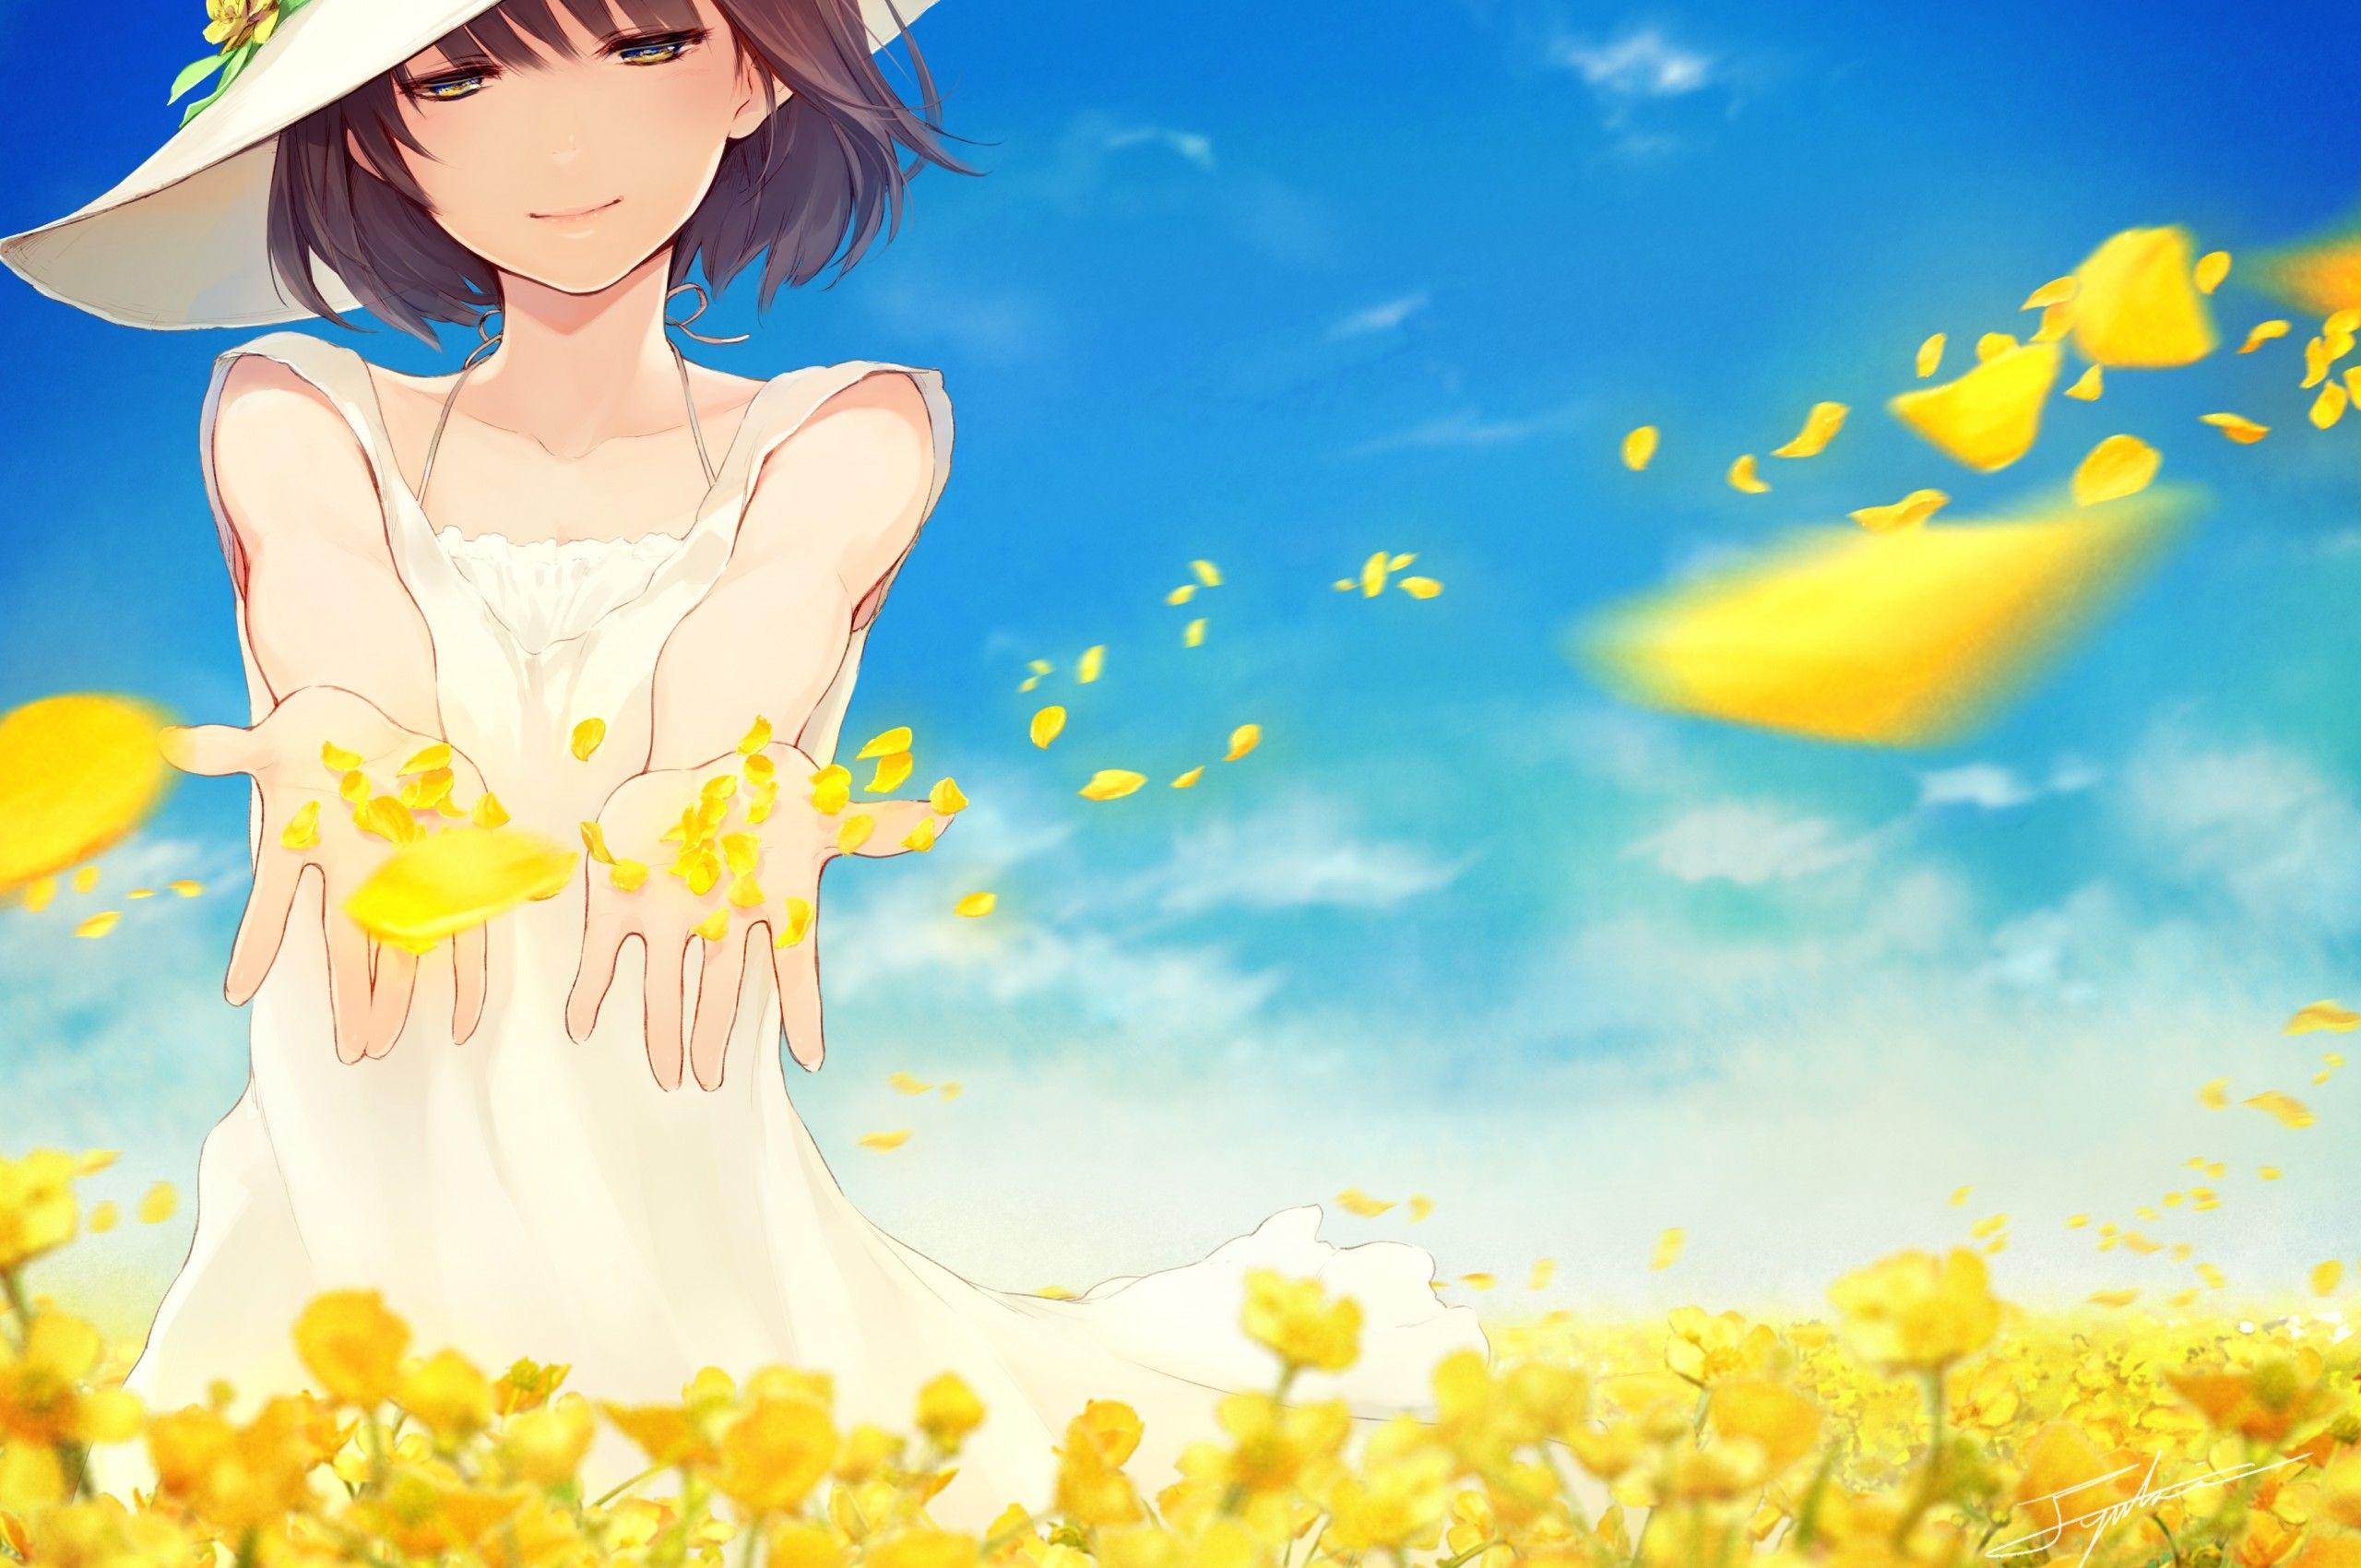 Desktop Wallpaper Anime Girl Holiday Fun Bikini Summer Hd Image  Picture Background 515aa2